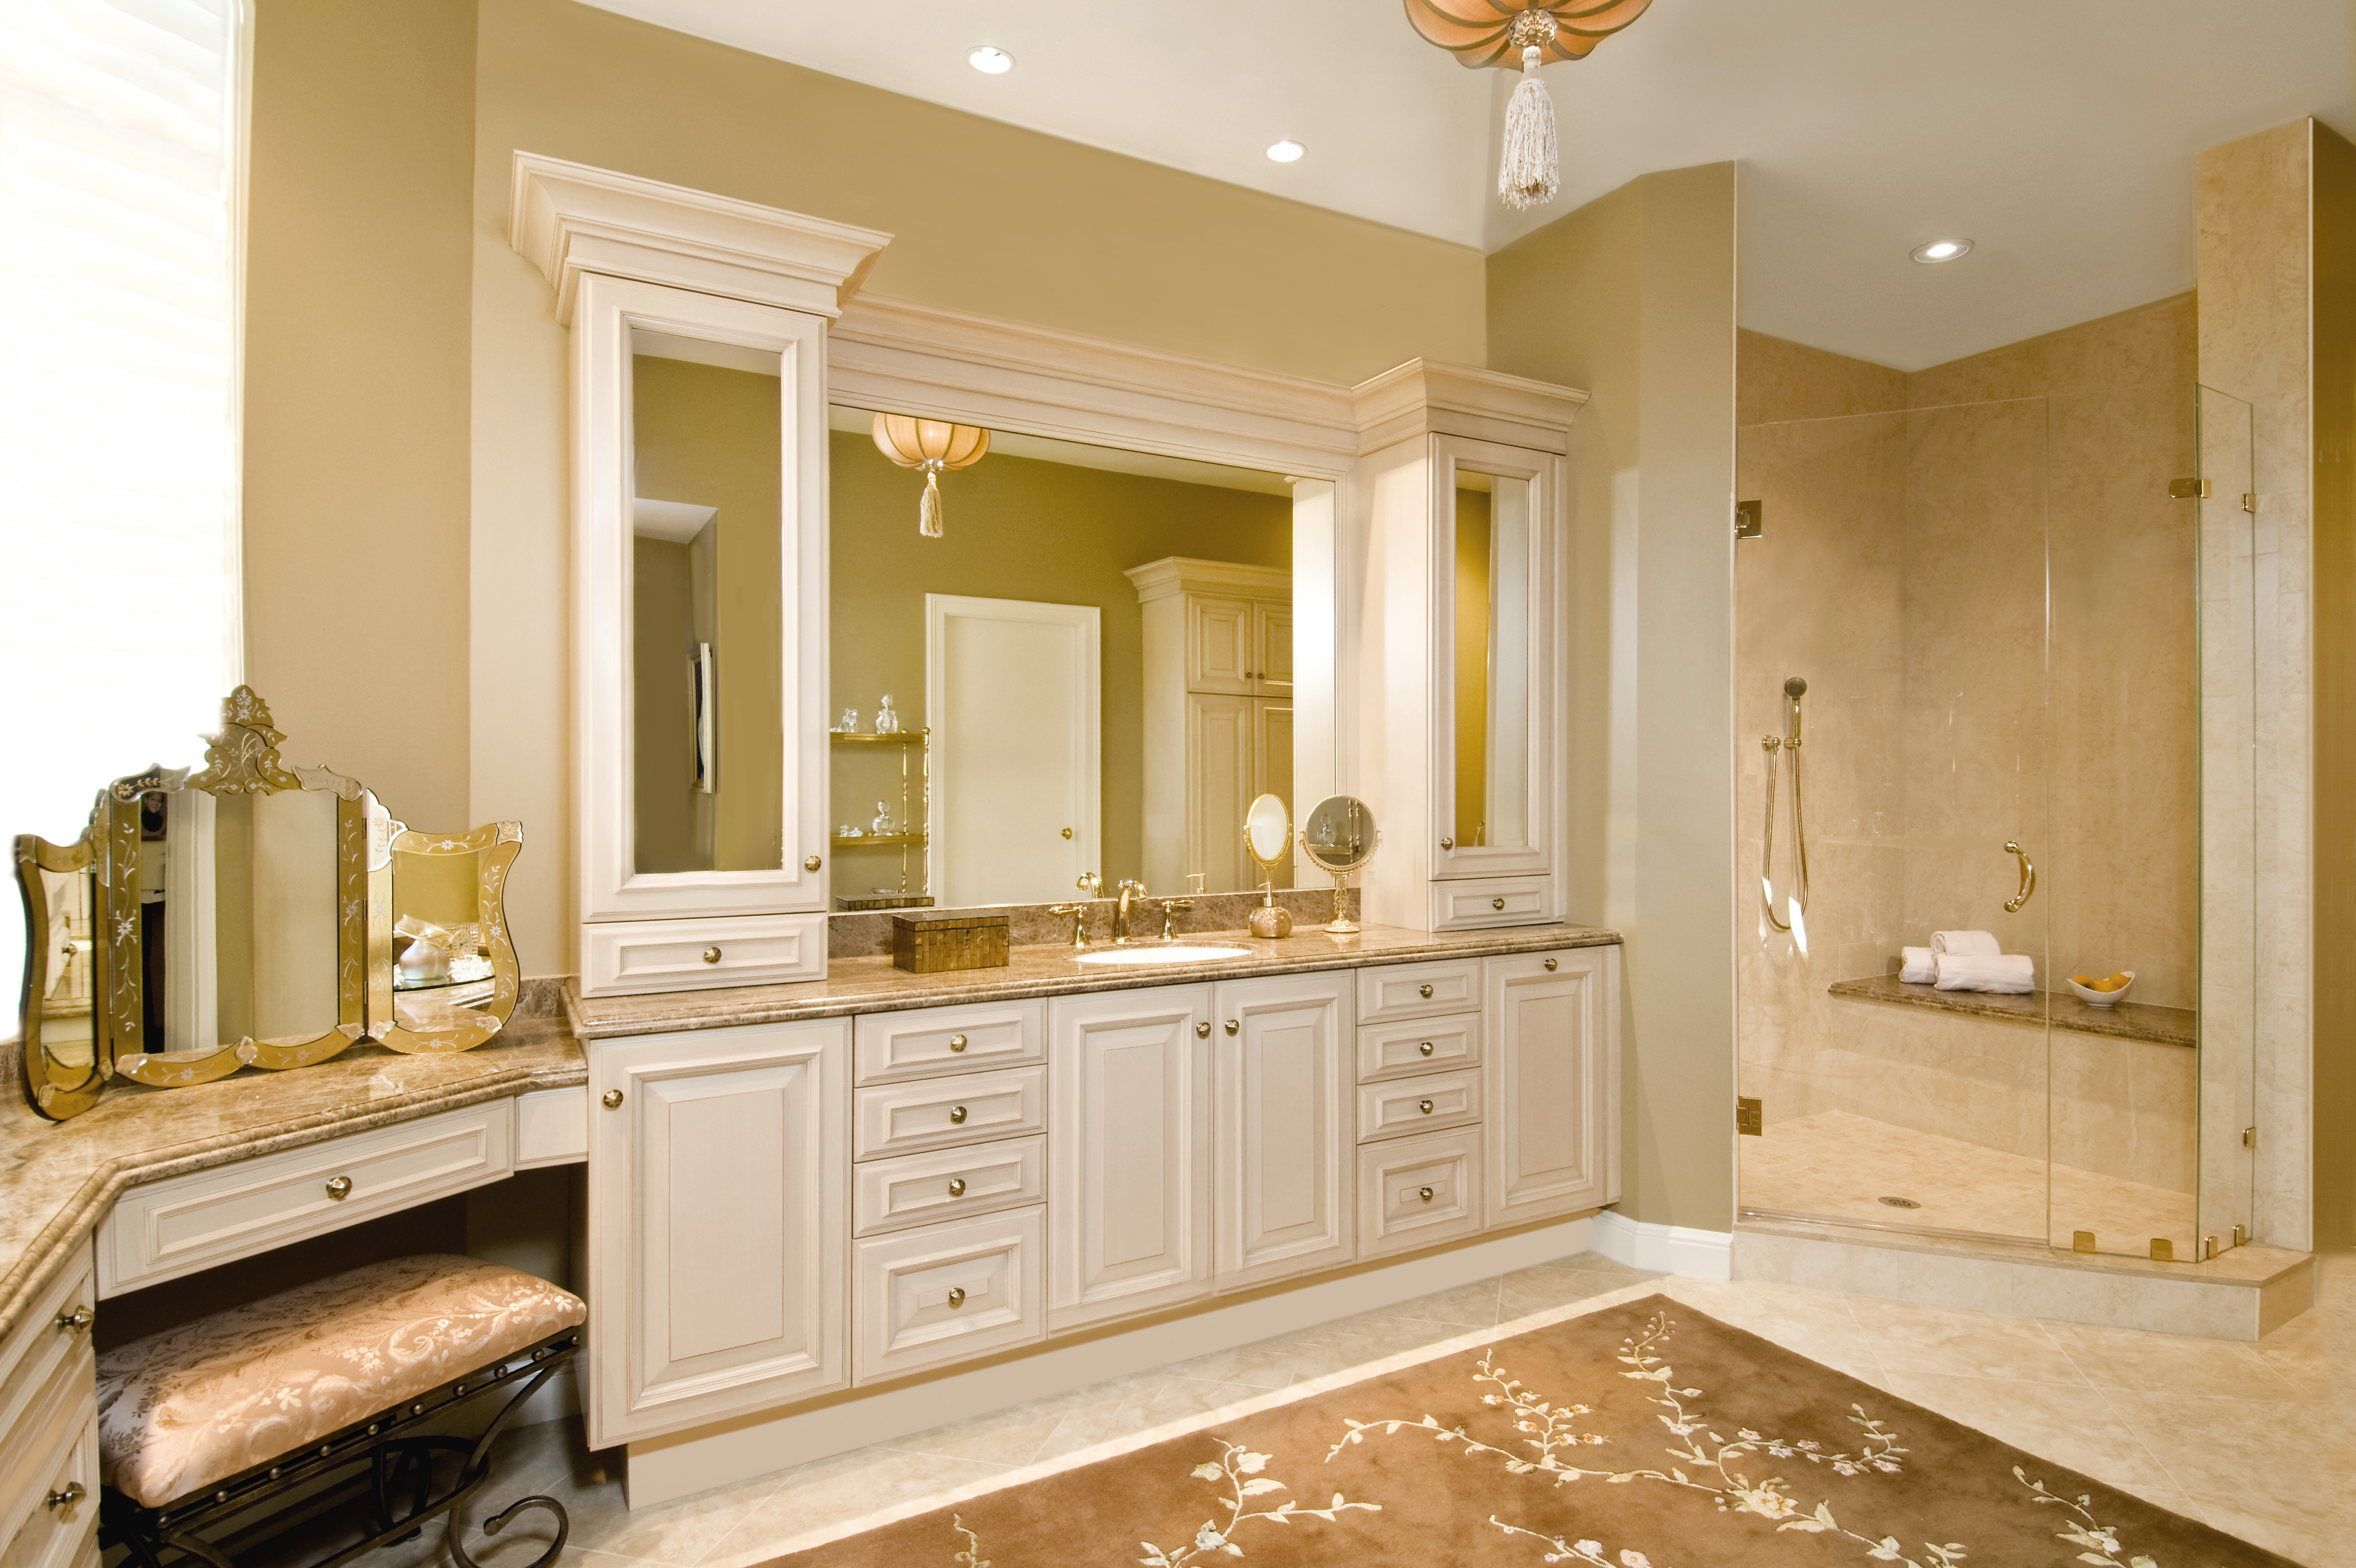 http://yourehome.net/wordpress/wp-content/uploads/2014/03/youre-home-custom-interiors_luxurious-master-bathroom_01Feature.jpg